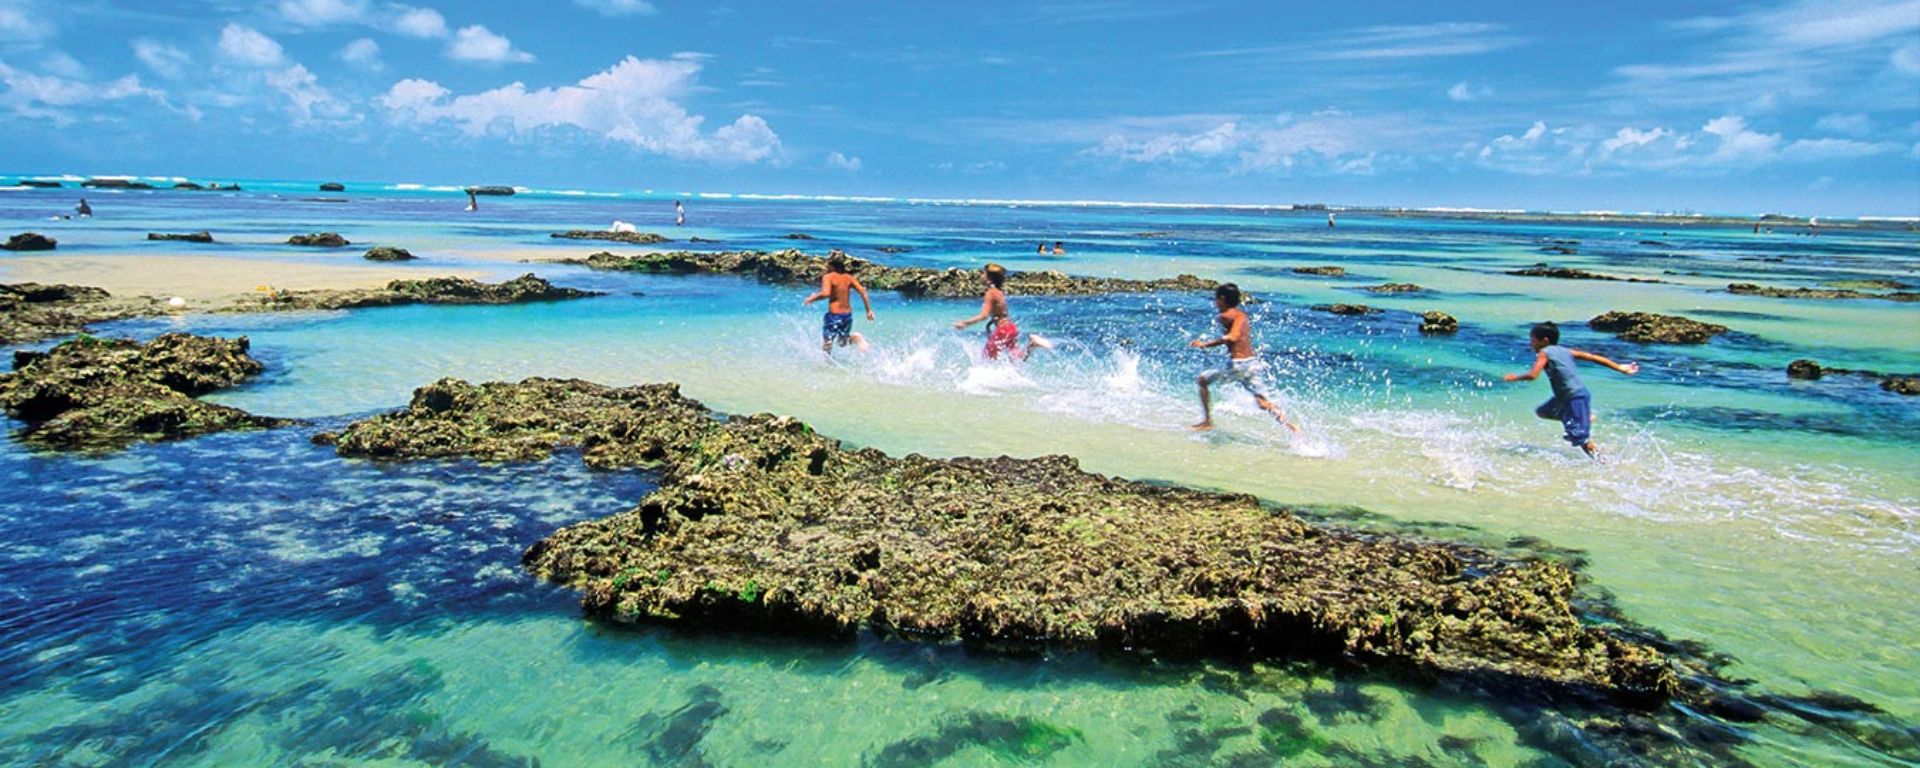 The Coral Beach Resort by Atlantica - DESTINO